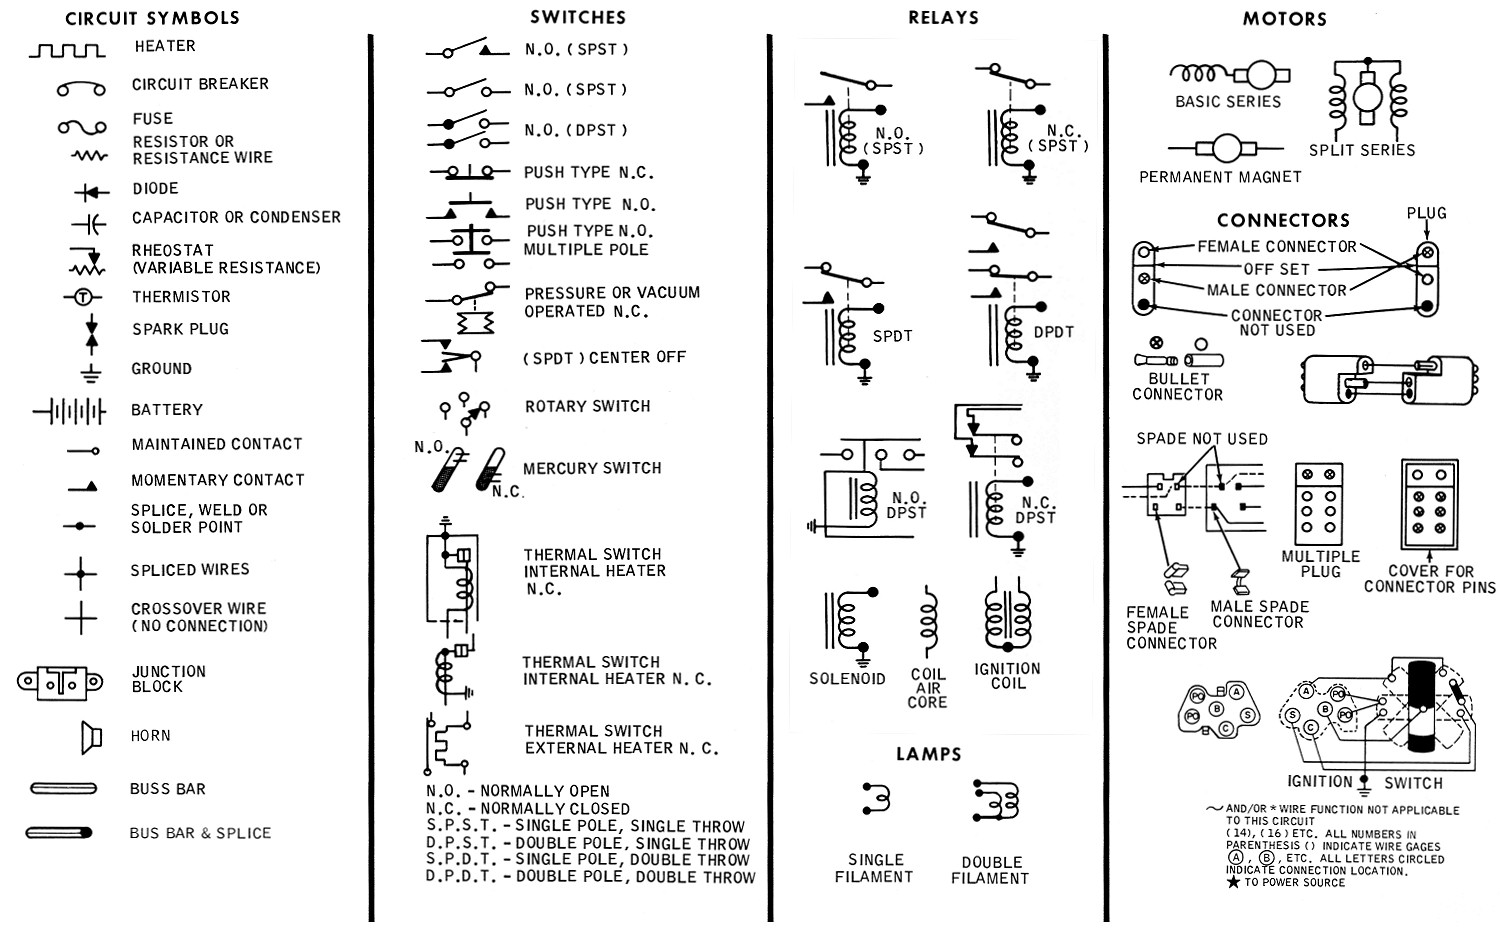 Electrical Chart Symbols